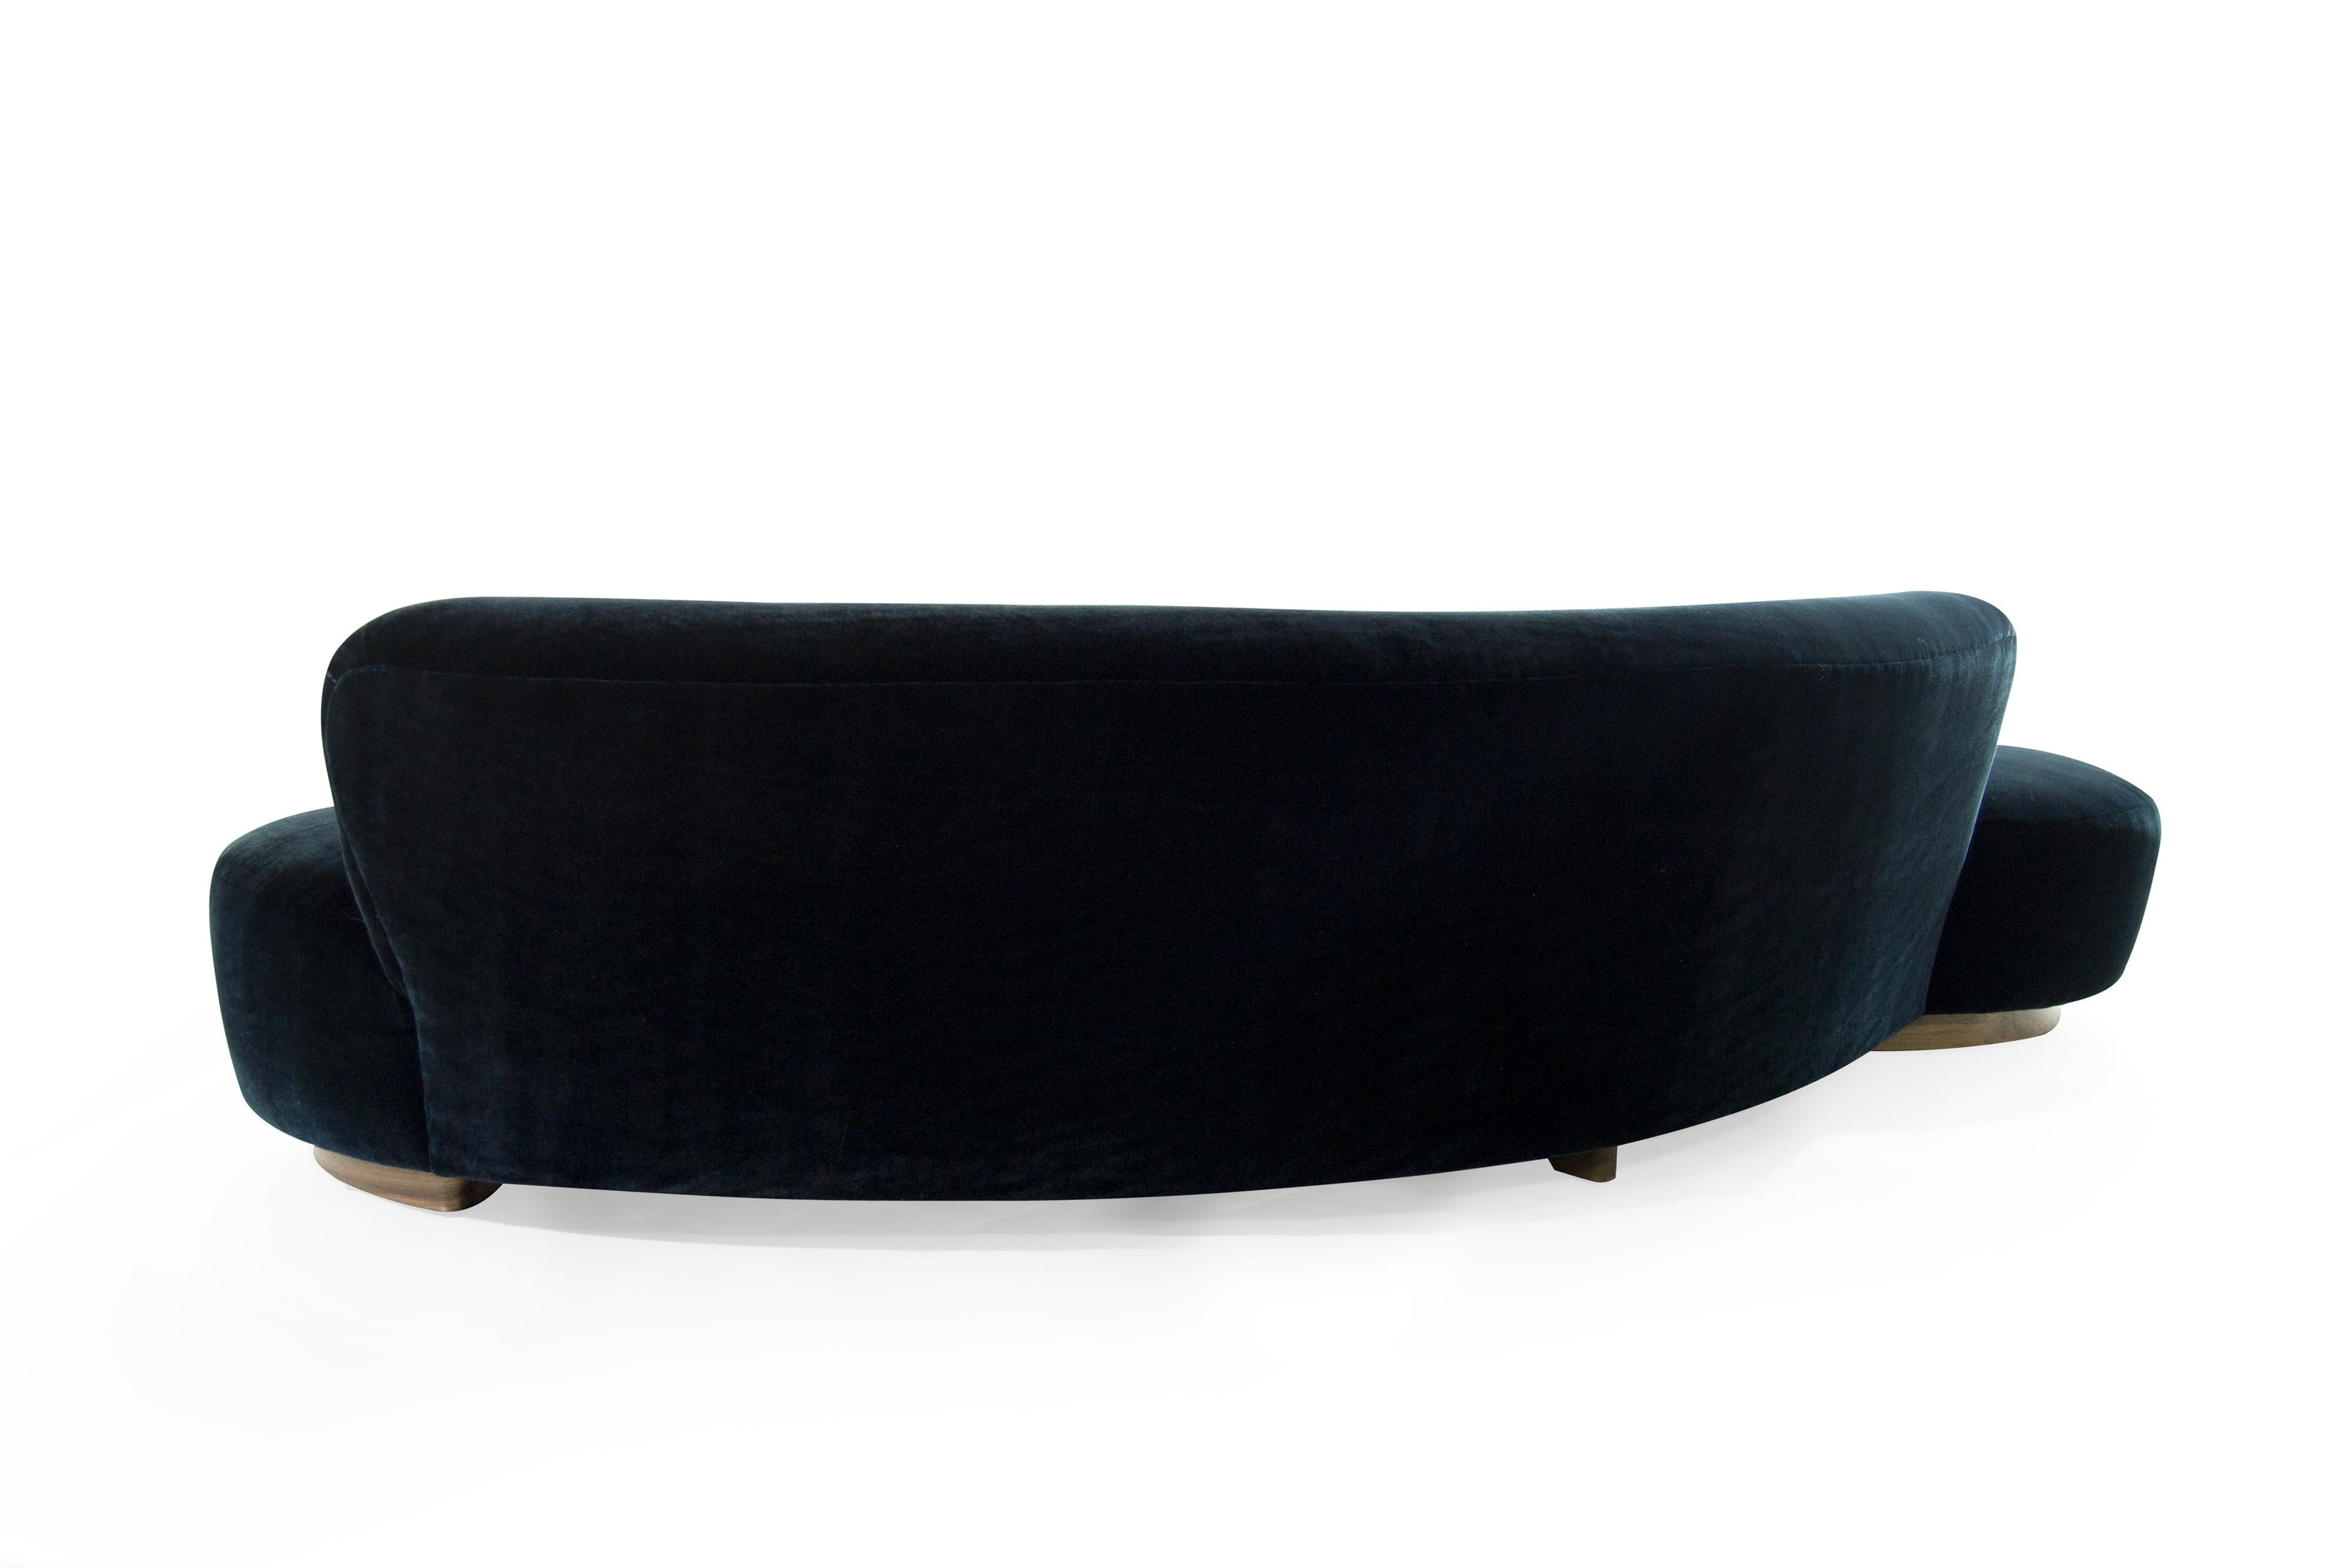 Large Scale Serpentine Sofa in Navy Mohair by Vladimir Kagan 1